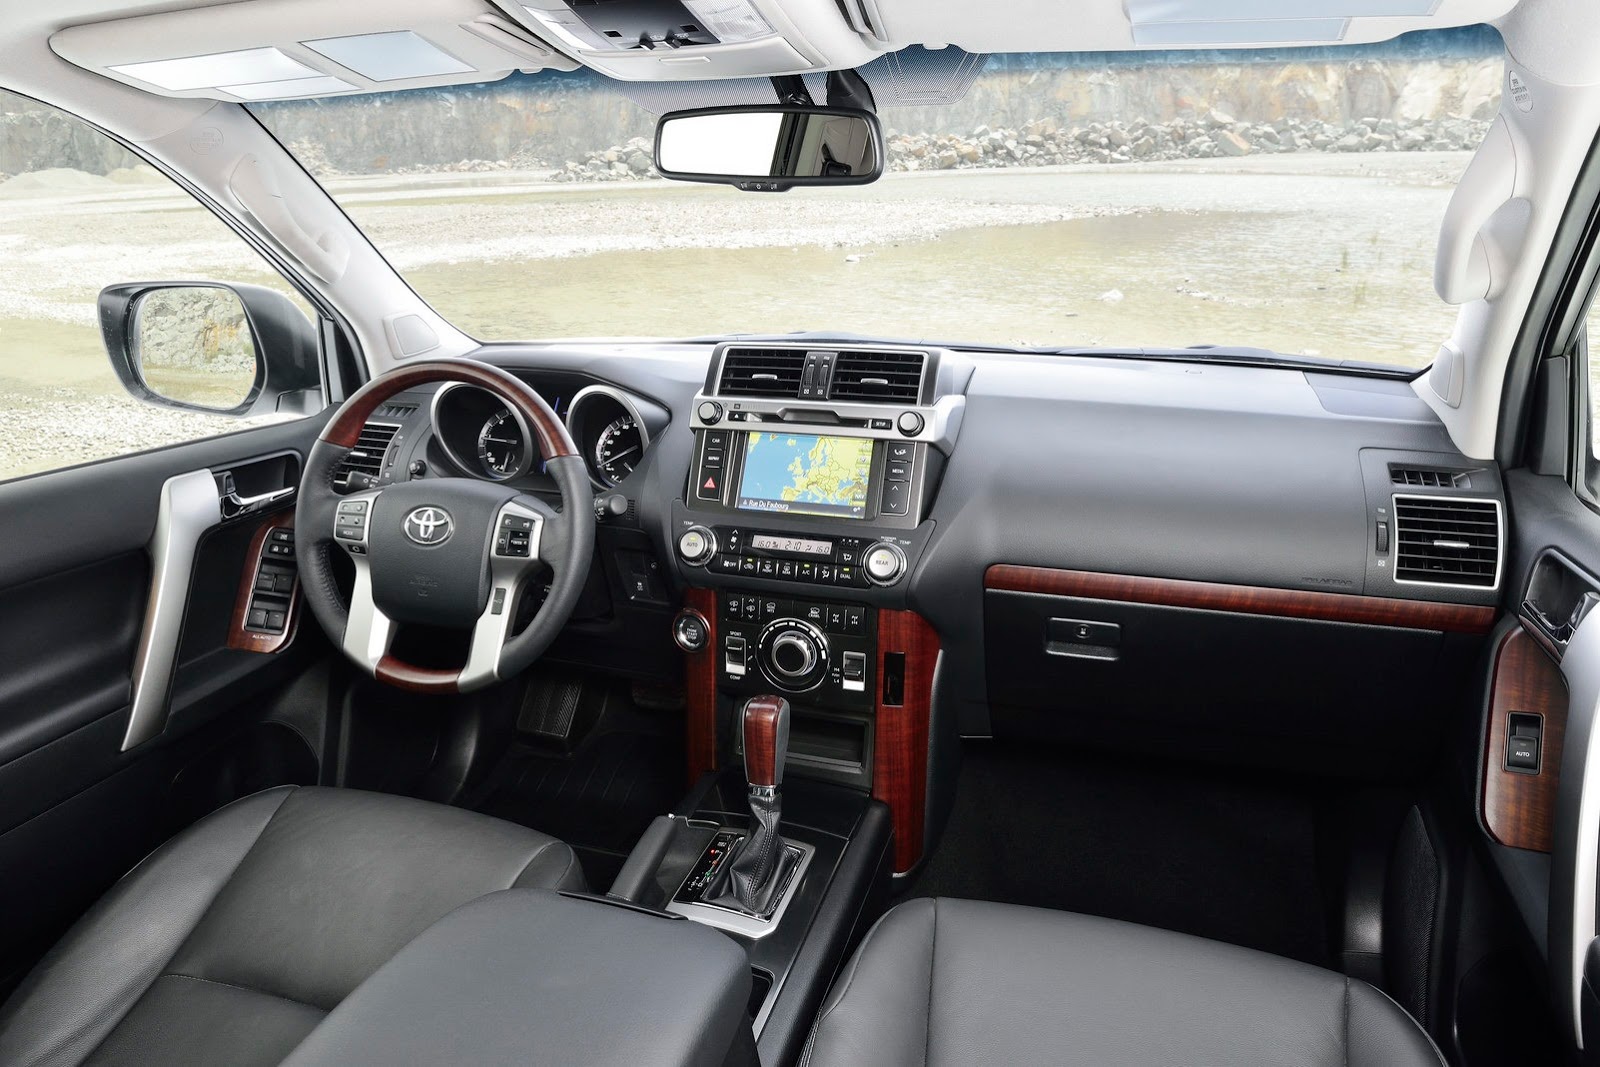 2014 Toyota Land Cruiser facelift